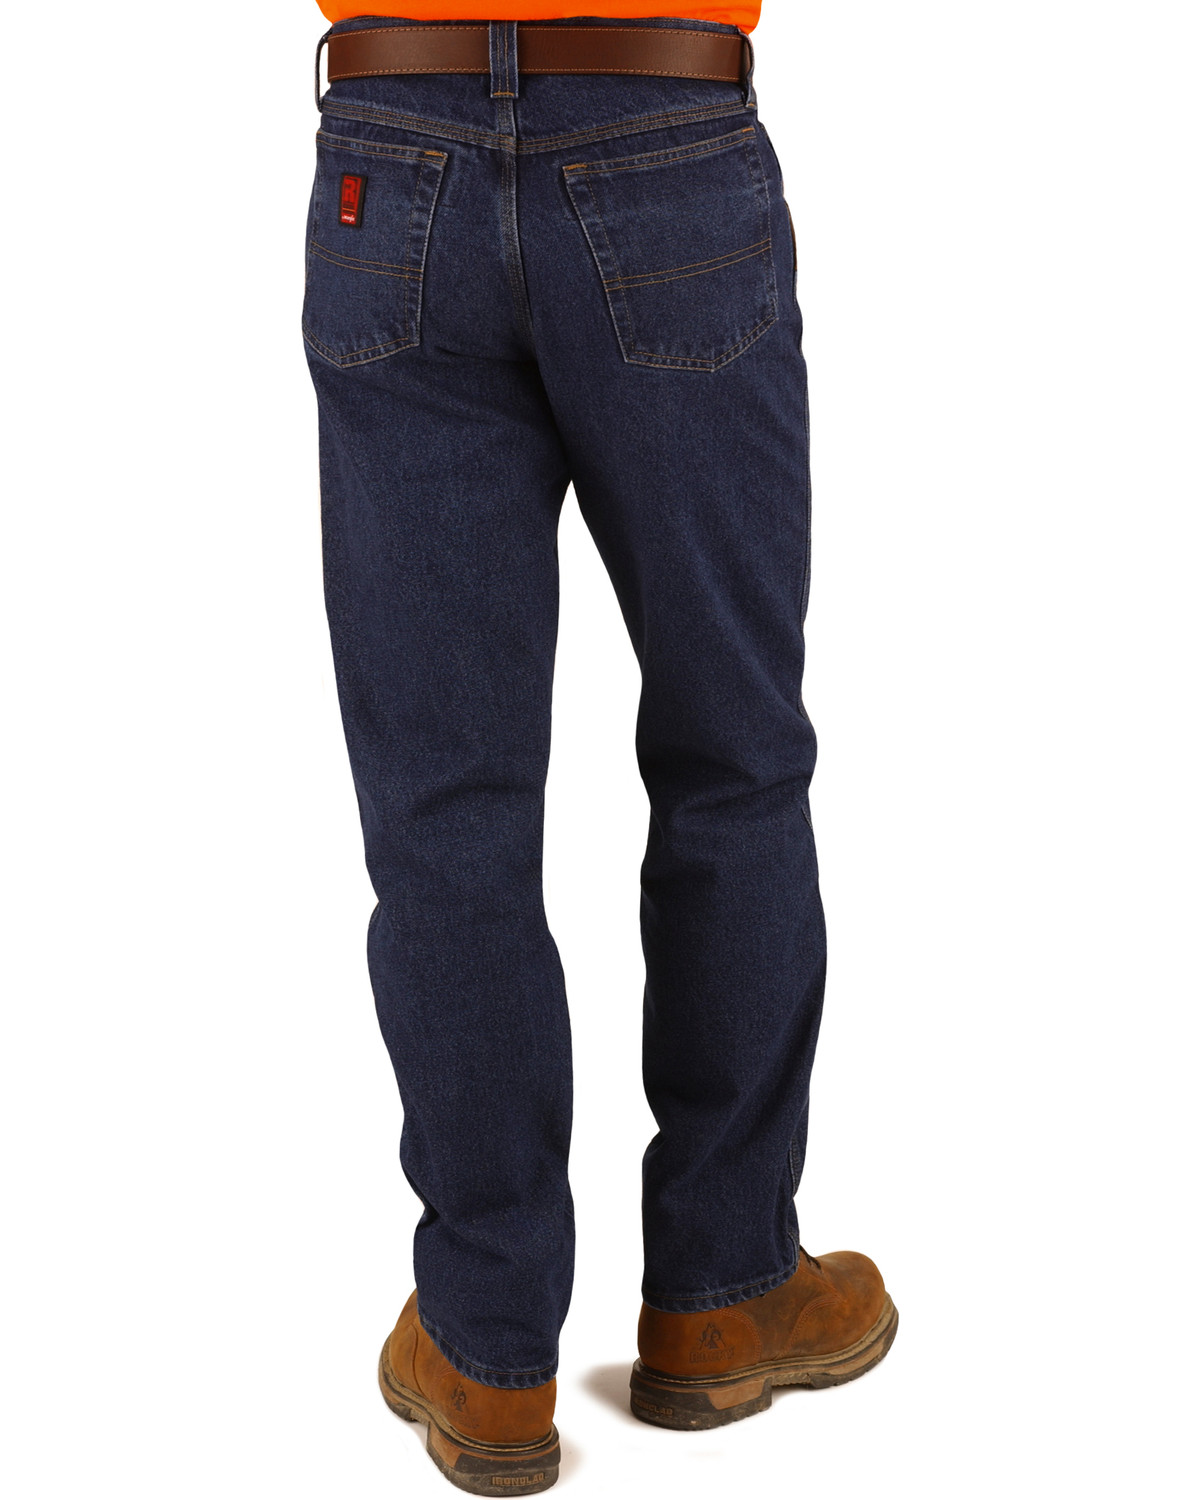 Wrangler Riggs Workwear Men's Five Pocket Jeans